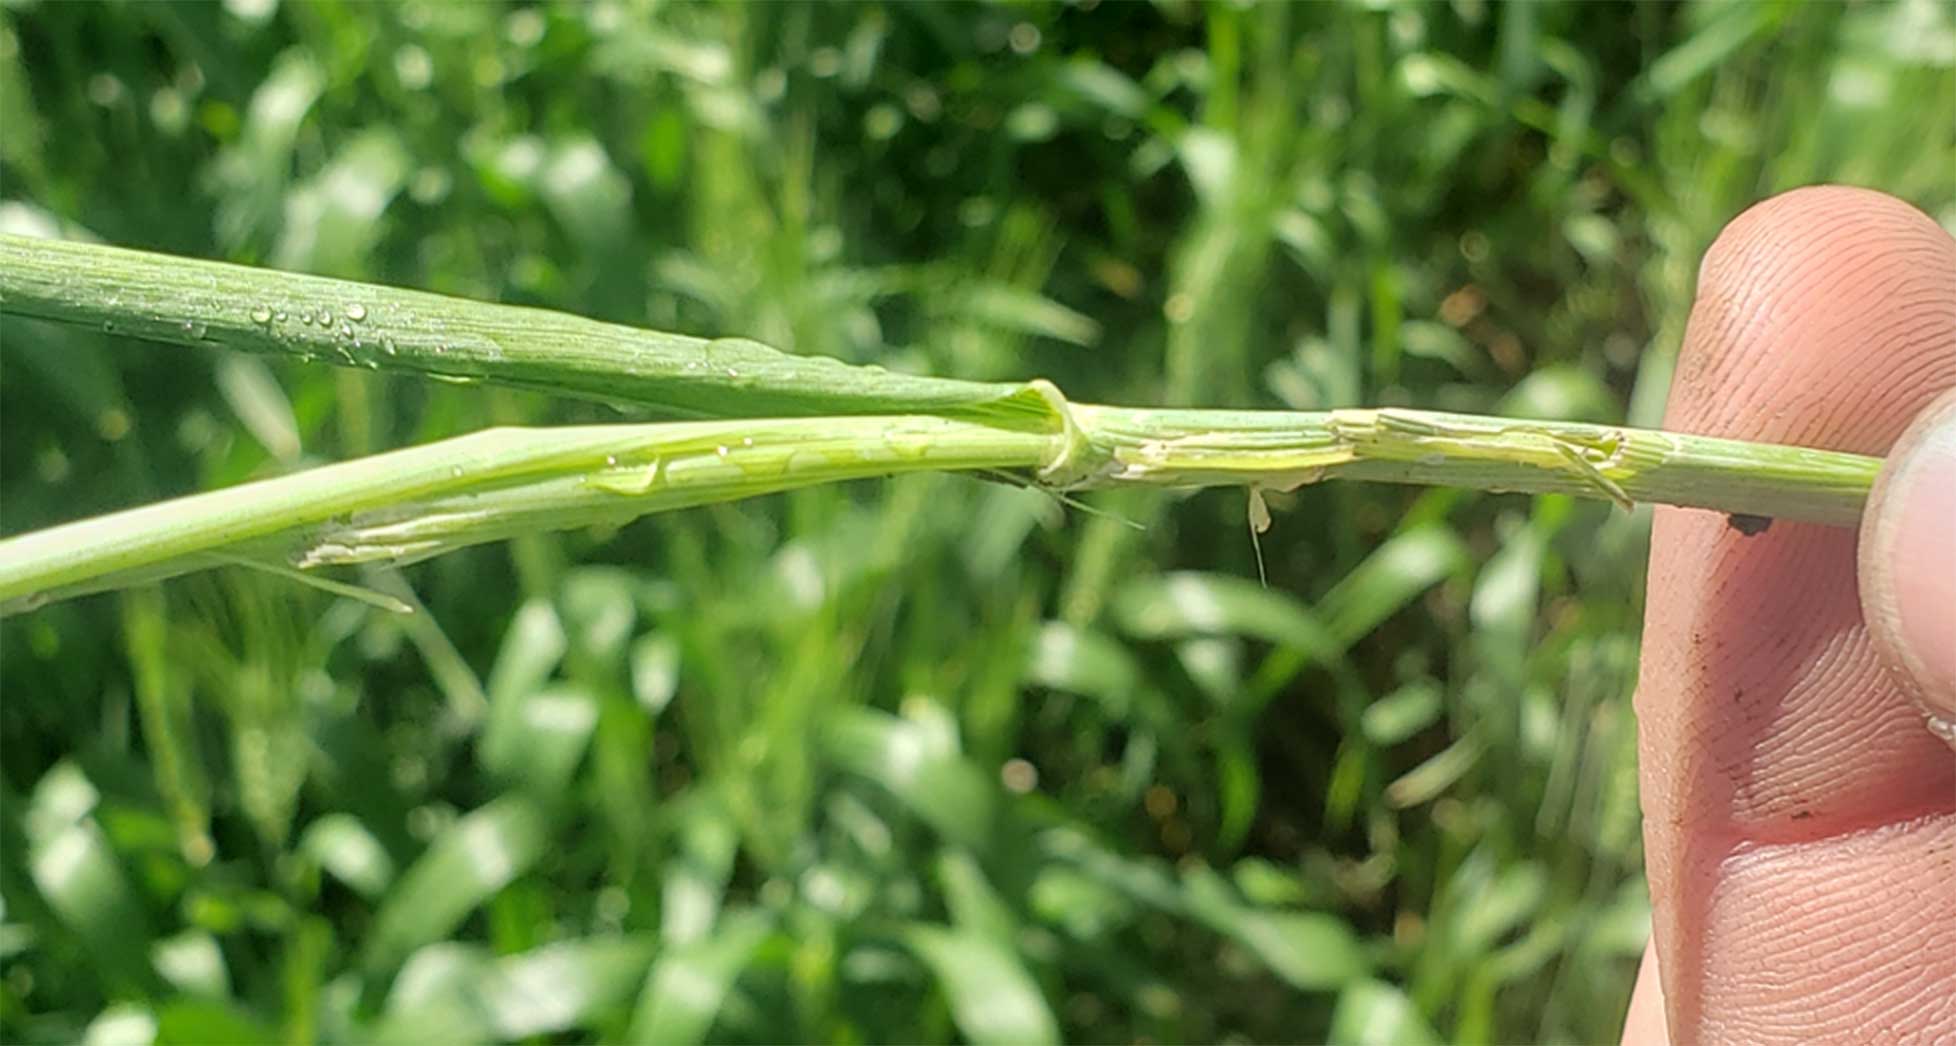 Green wheat stems with feeding injury from slugs